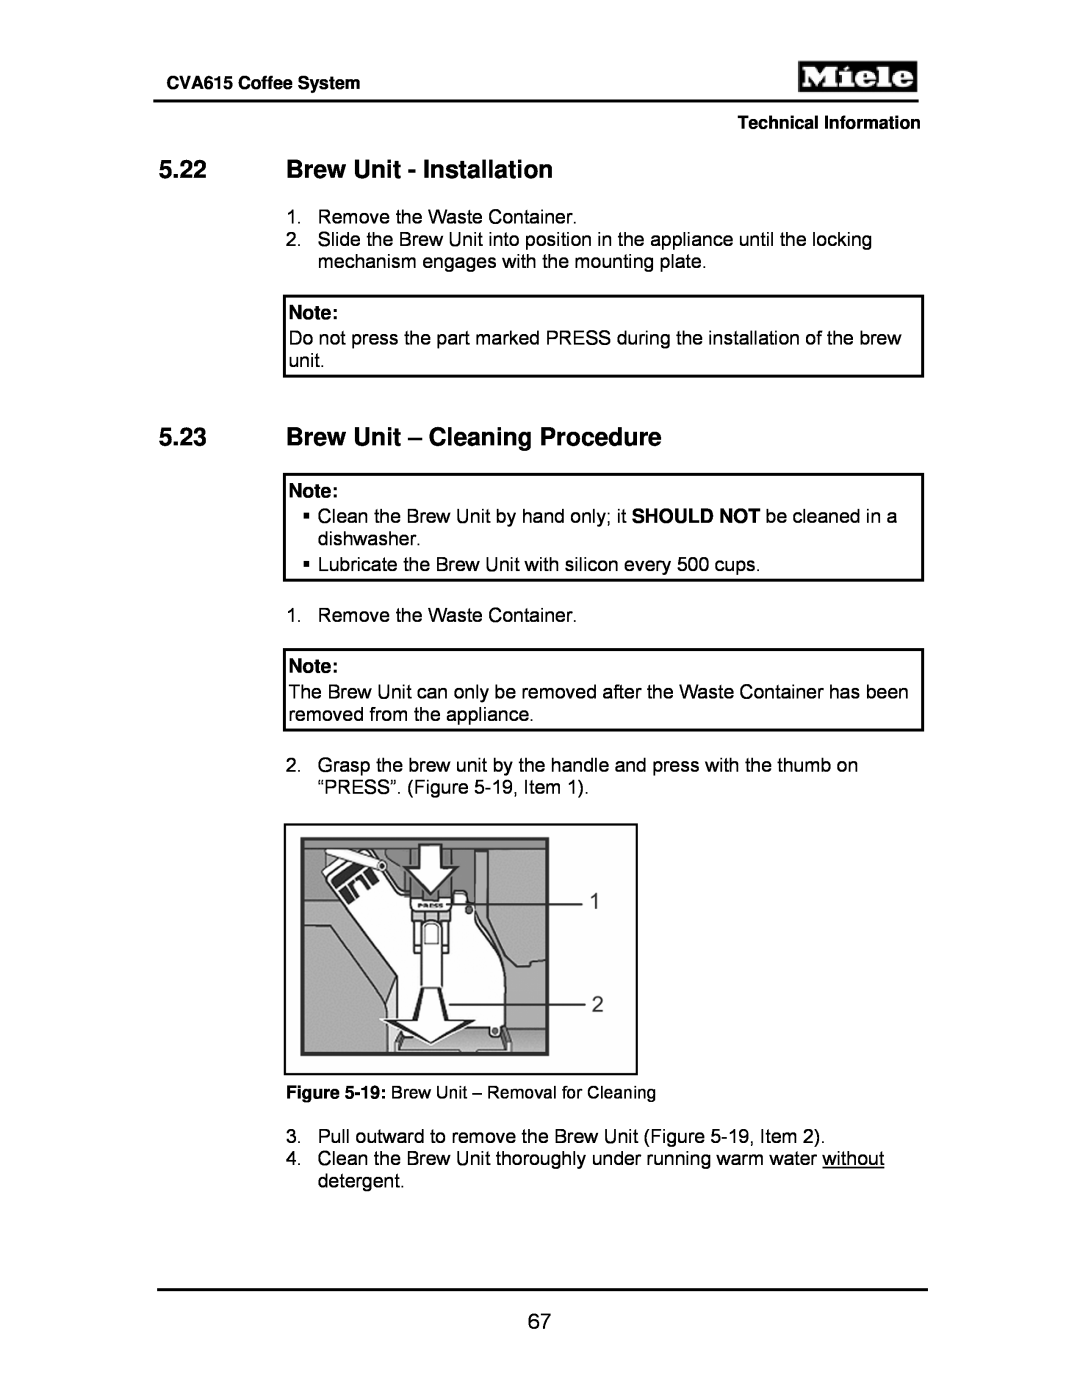 Miele CVA615 manual 5.22Brew Unit - Installation, 5.23Brew Unit – Cleaning Procedure 